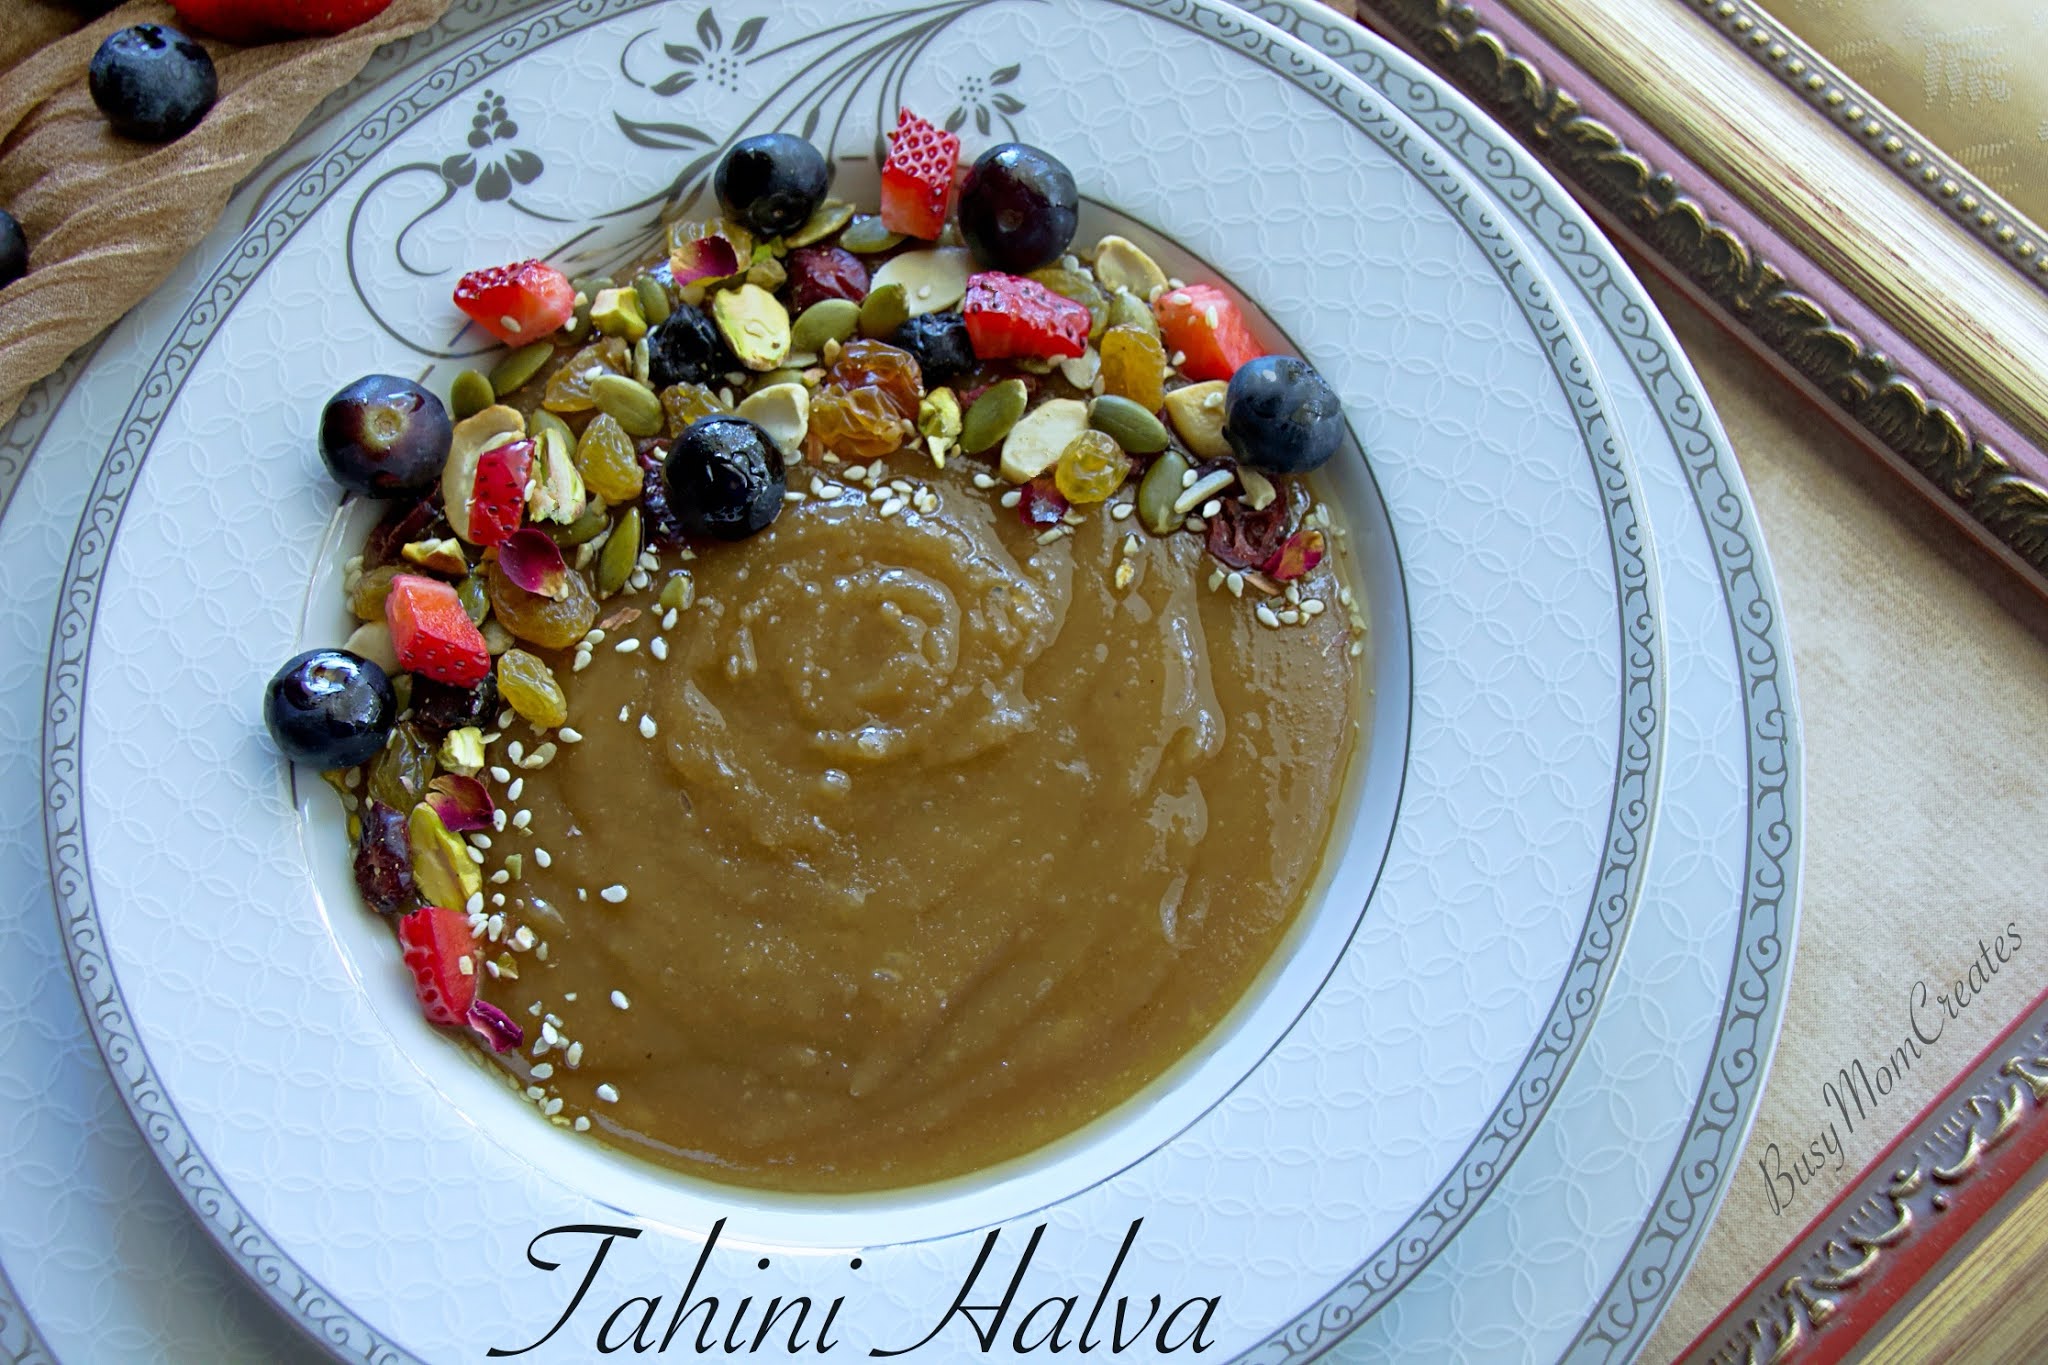 Turkish Halva Recipe  6 Easy Steps to Make Authentic Tahini Halva